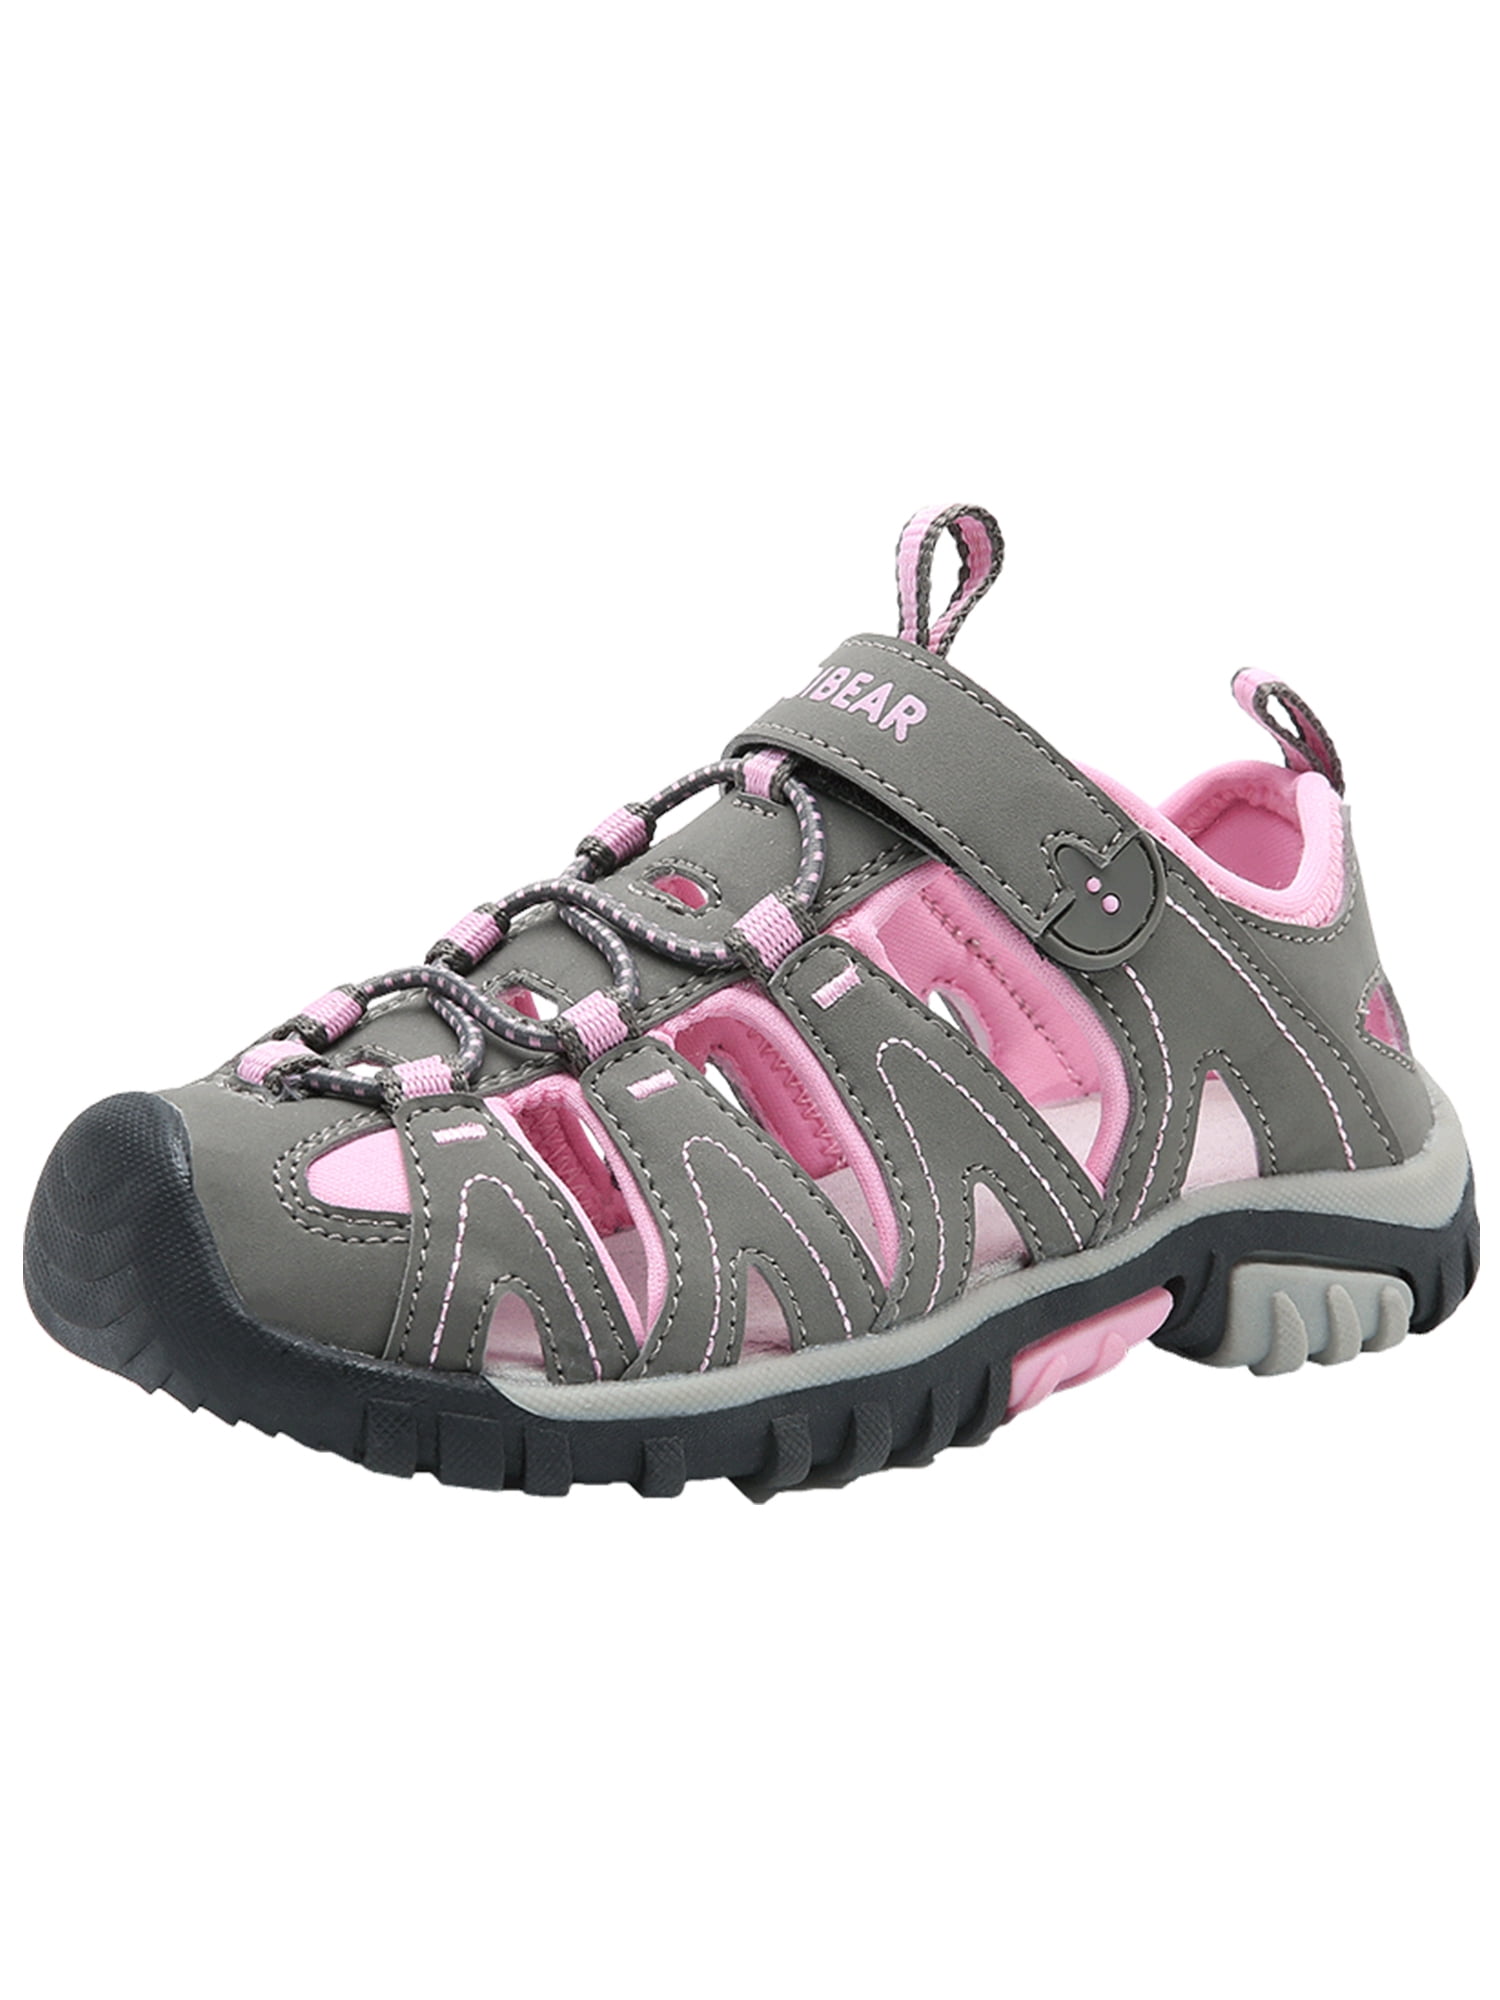 Kids Girls Boys Toddlers Athletic Sandals Outdoor Hiking Walking Sport Sandals 